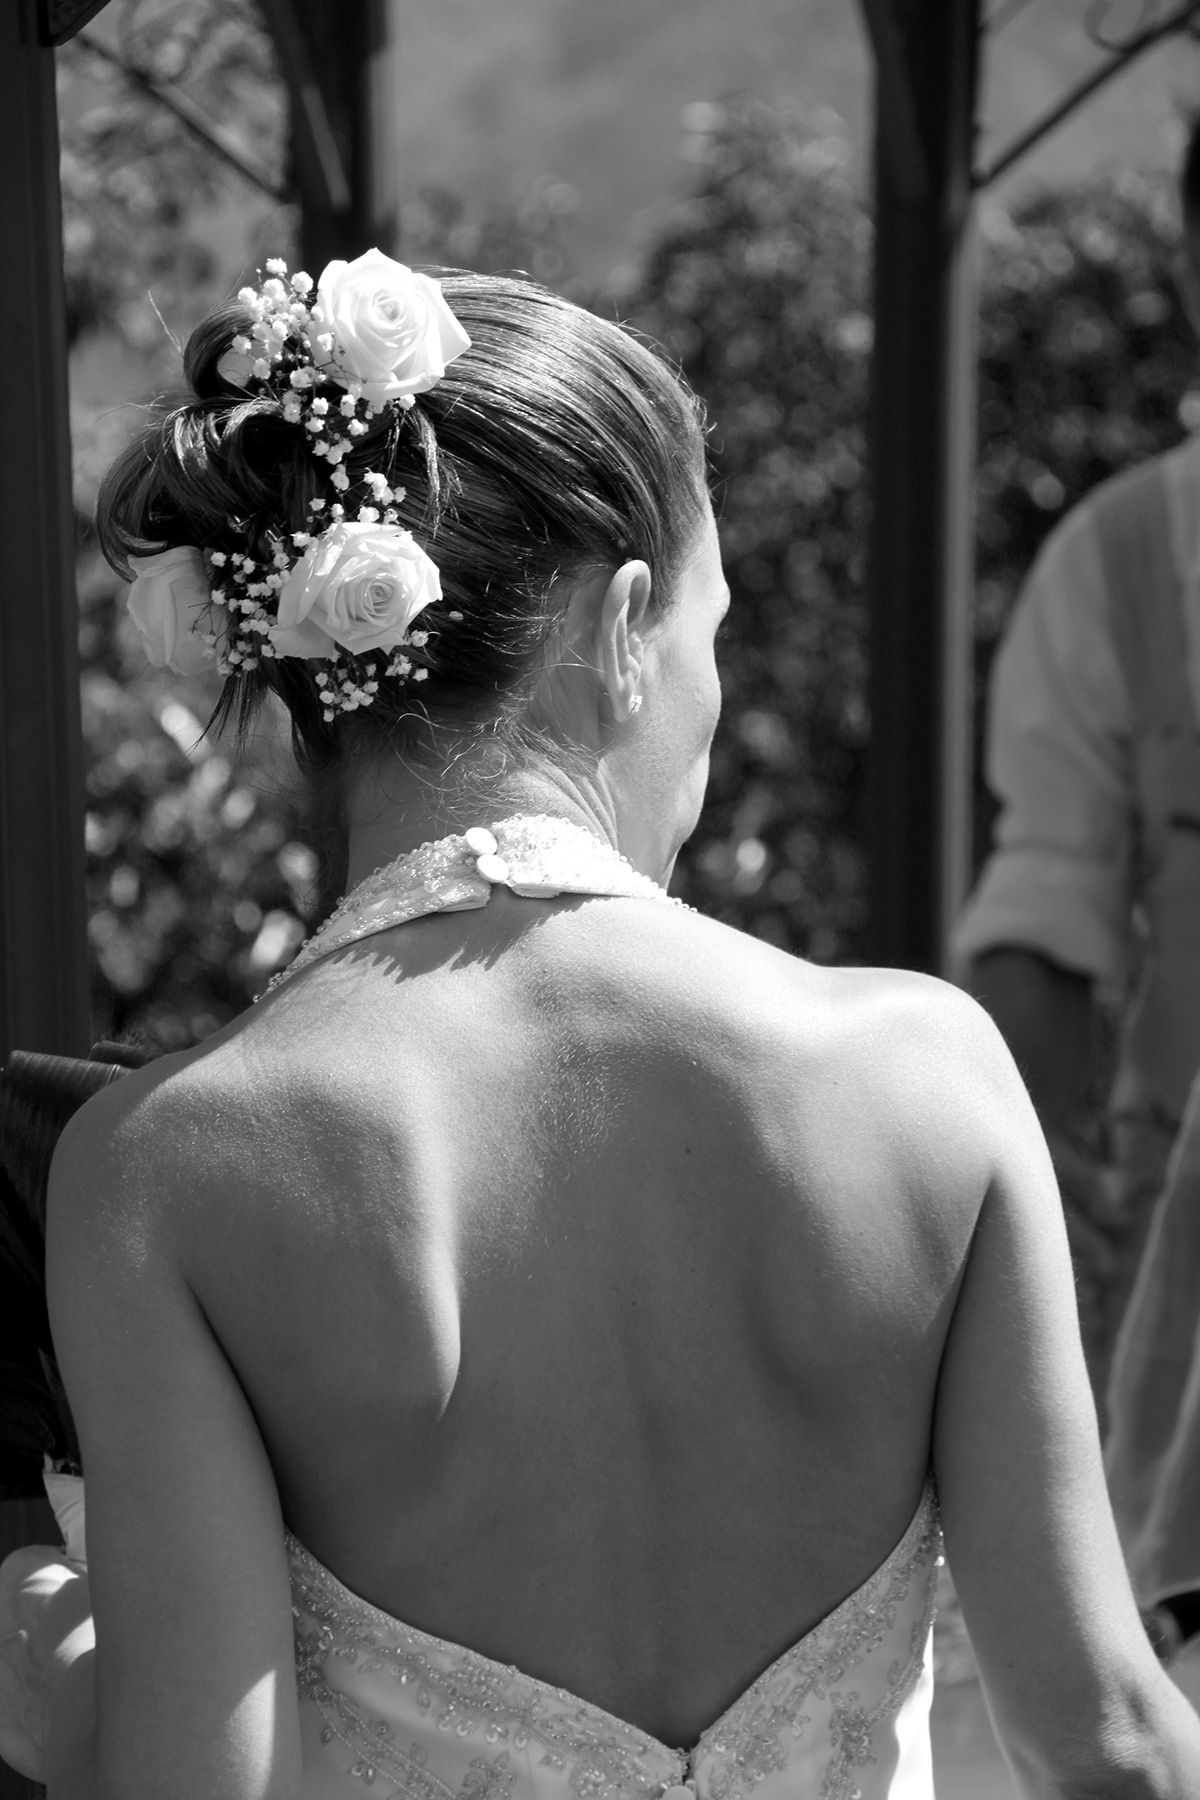 wedding Love matrimonio Tuscany toscana Massa carrara apella agriturismo montagna verde farm holidays lunigiana Italy bride groom